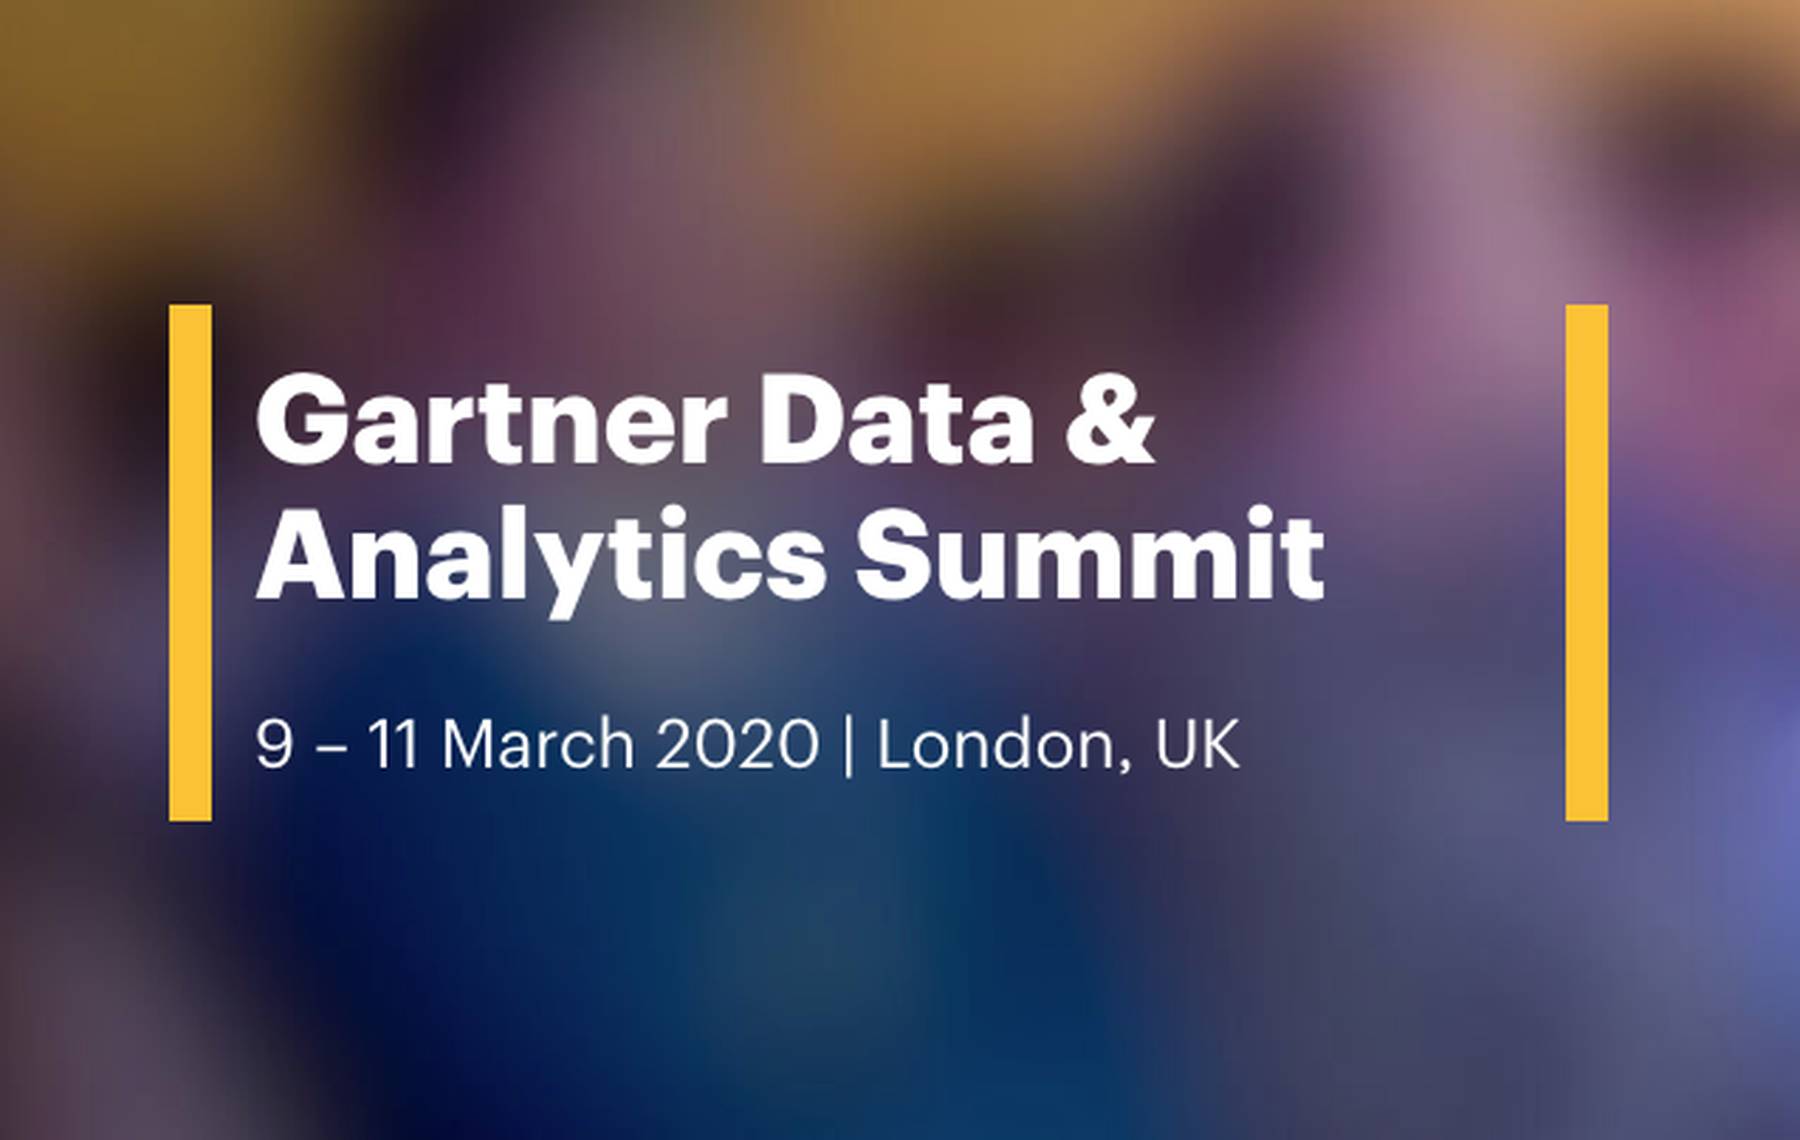 Data & Analytics Conference London 2020